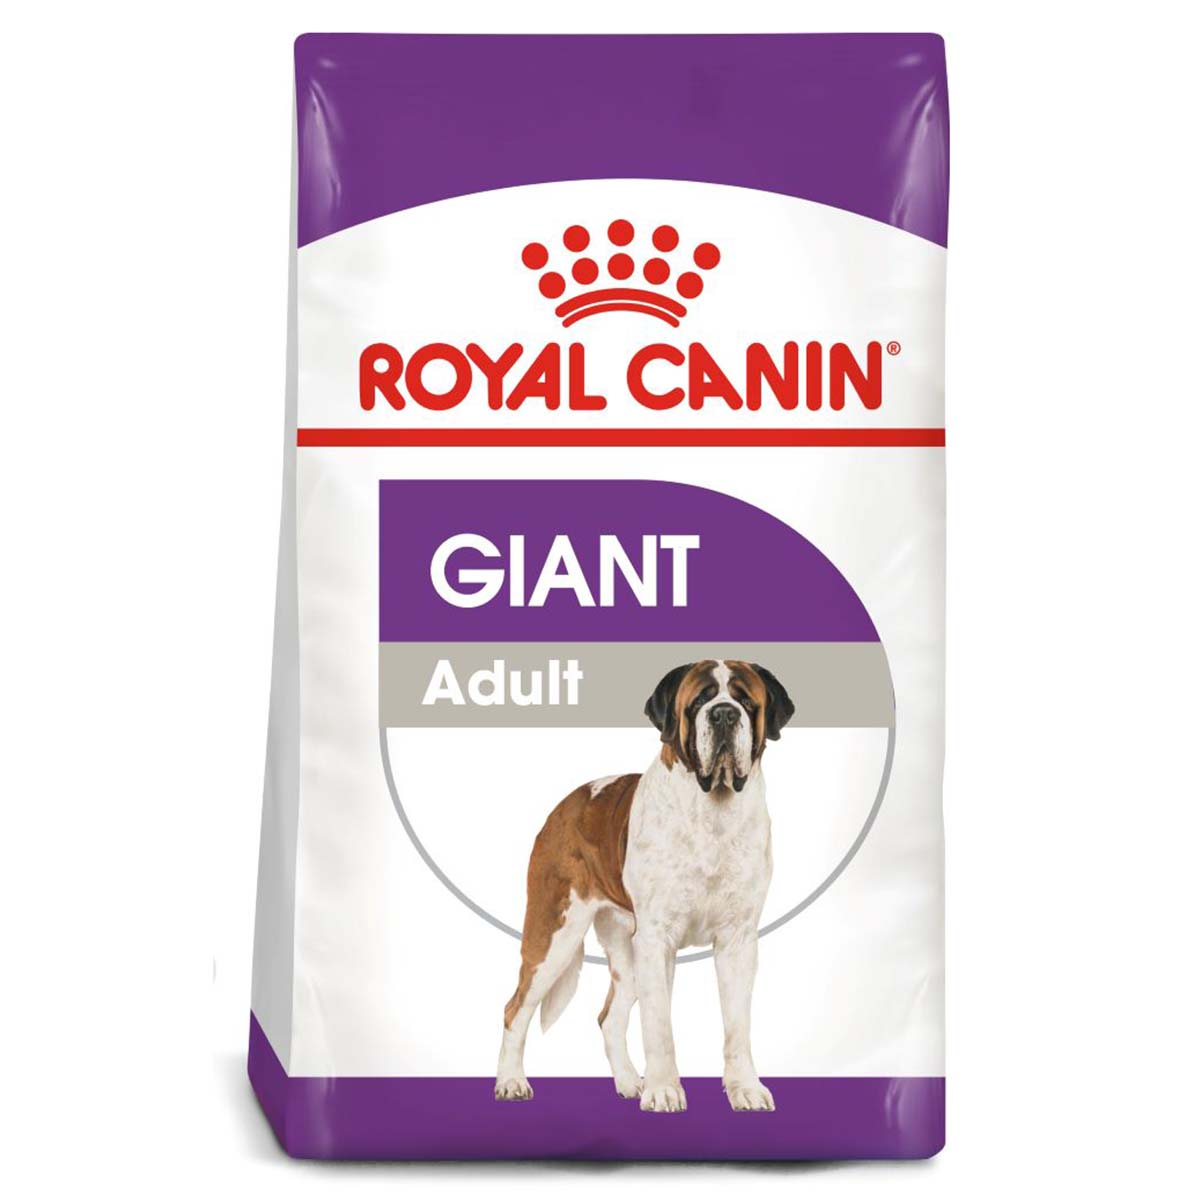 Royal Canin Giant Adult, Alimento para Perro, perro, Royal Canin, Mister Mascotas